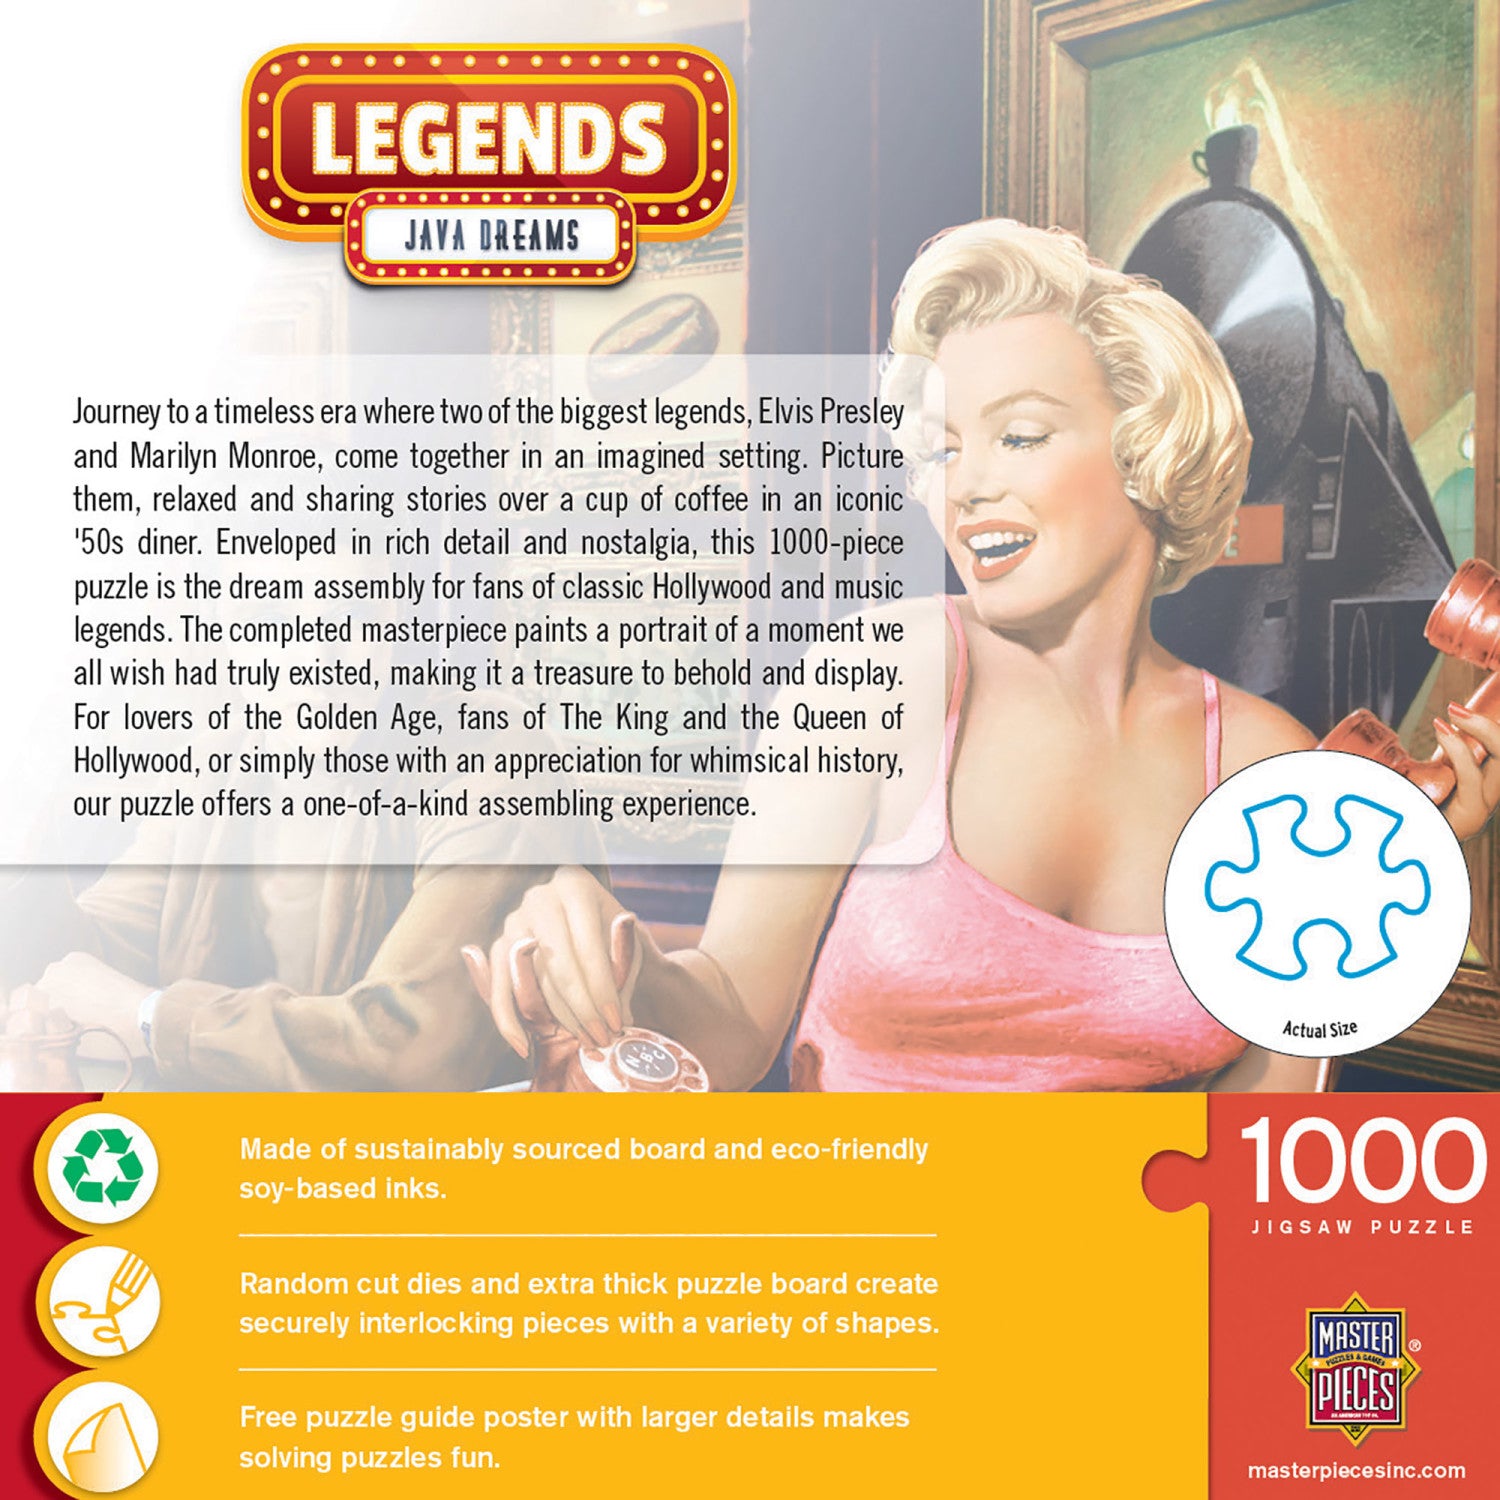 Legends - Java Dreams 1000 Piece Jigsaw Puzzle